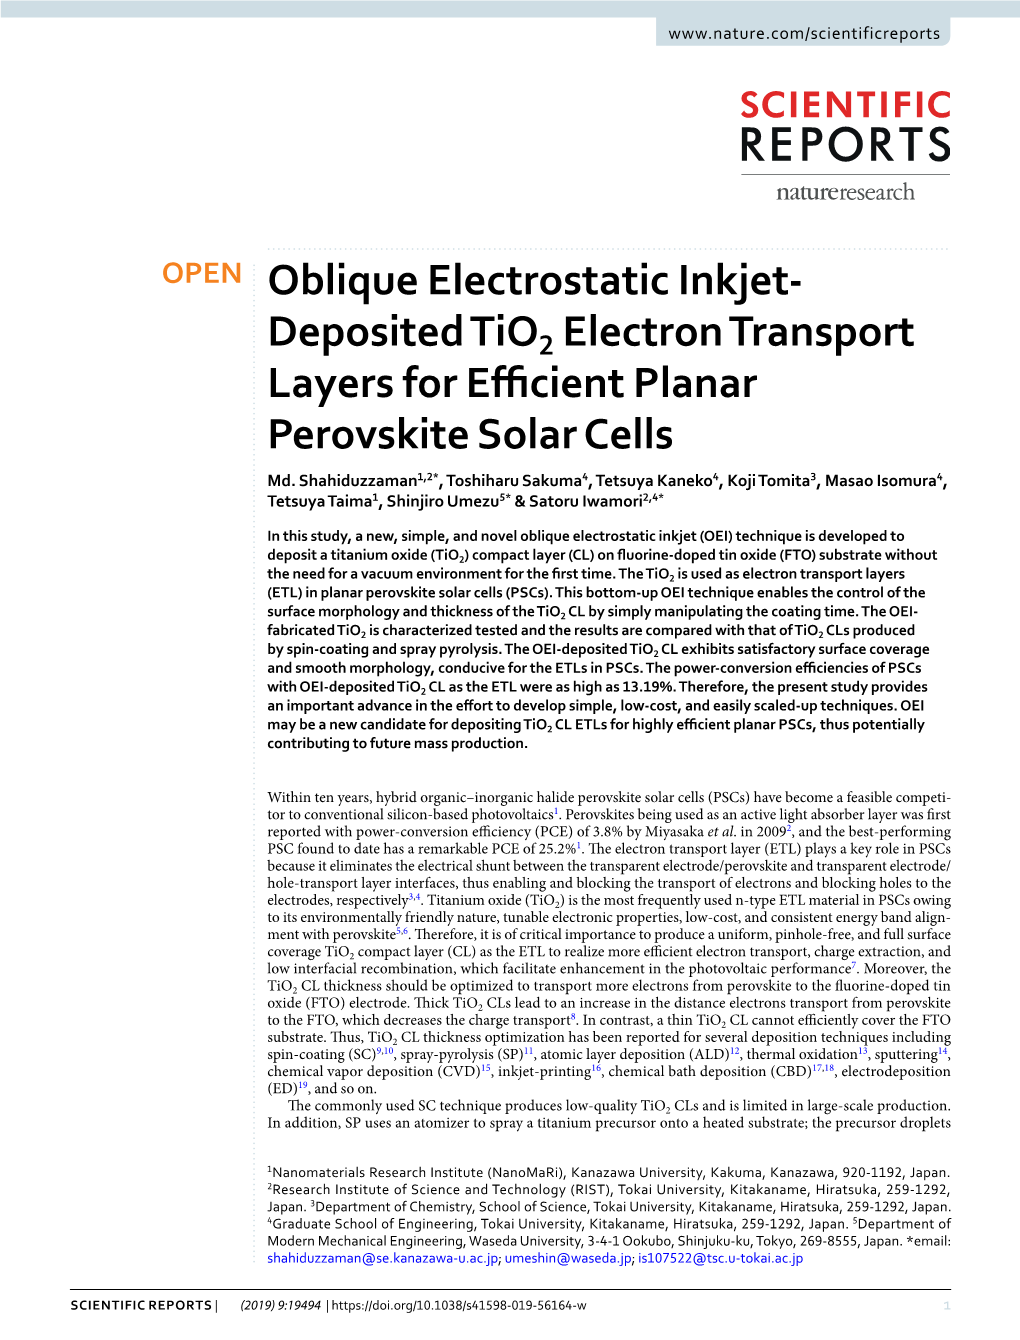 Oblique Electrostatic Inkjet-Deposited Tio2 Electron Transport Layers For